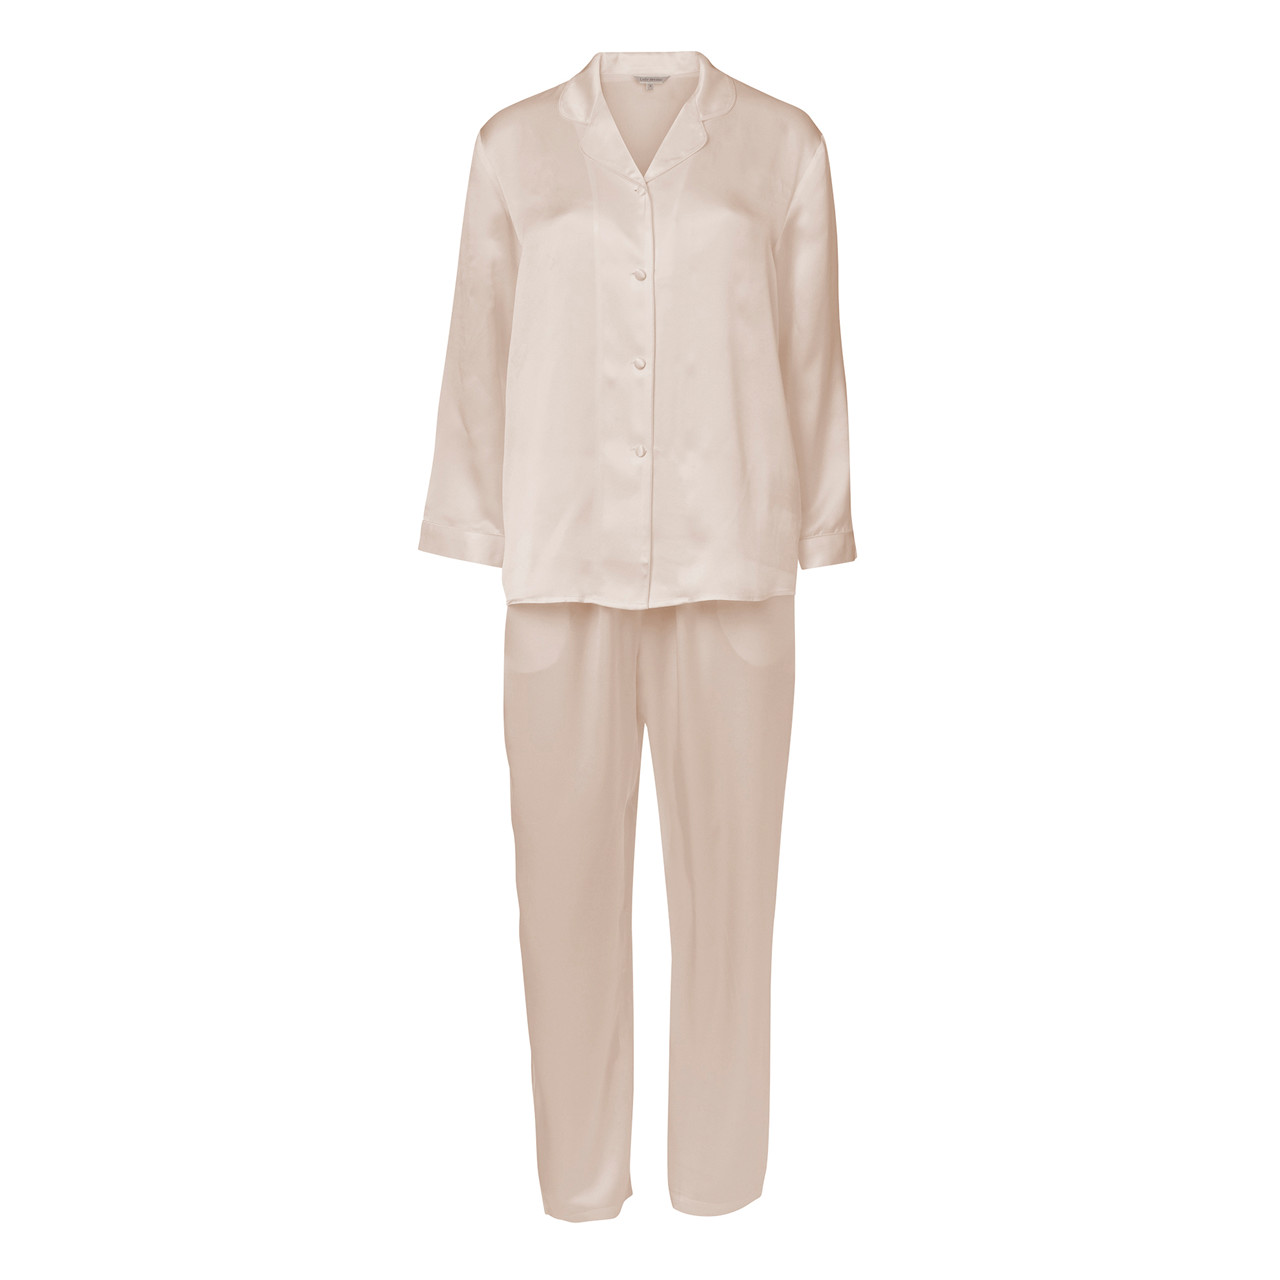 Lady Avenue Pure Silk Pyjamas, Farve: Grå, Størrelse: XS, Dame